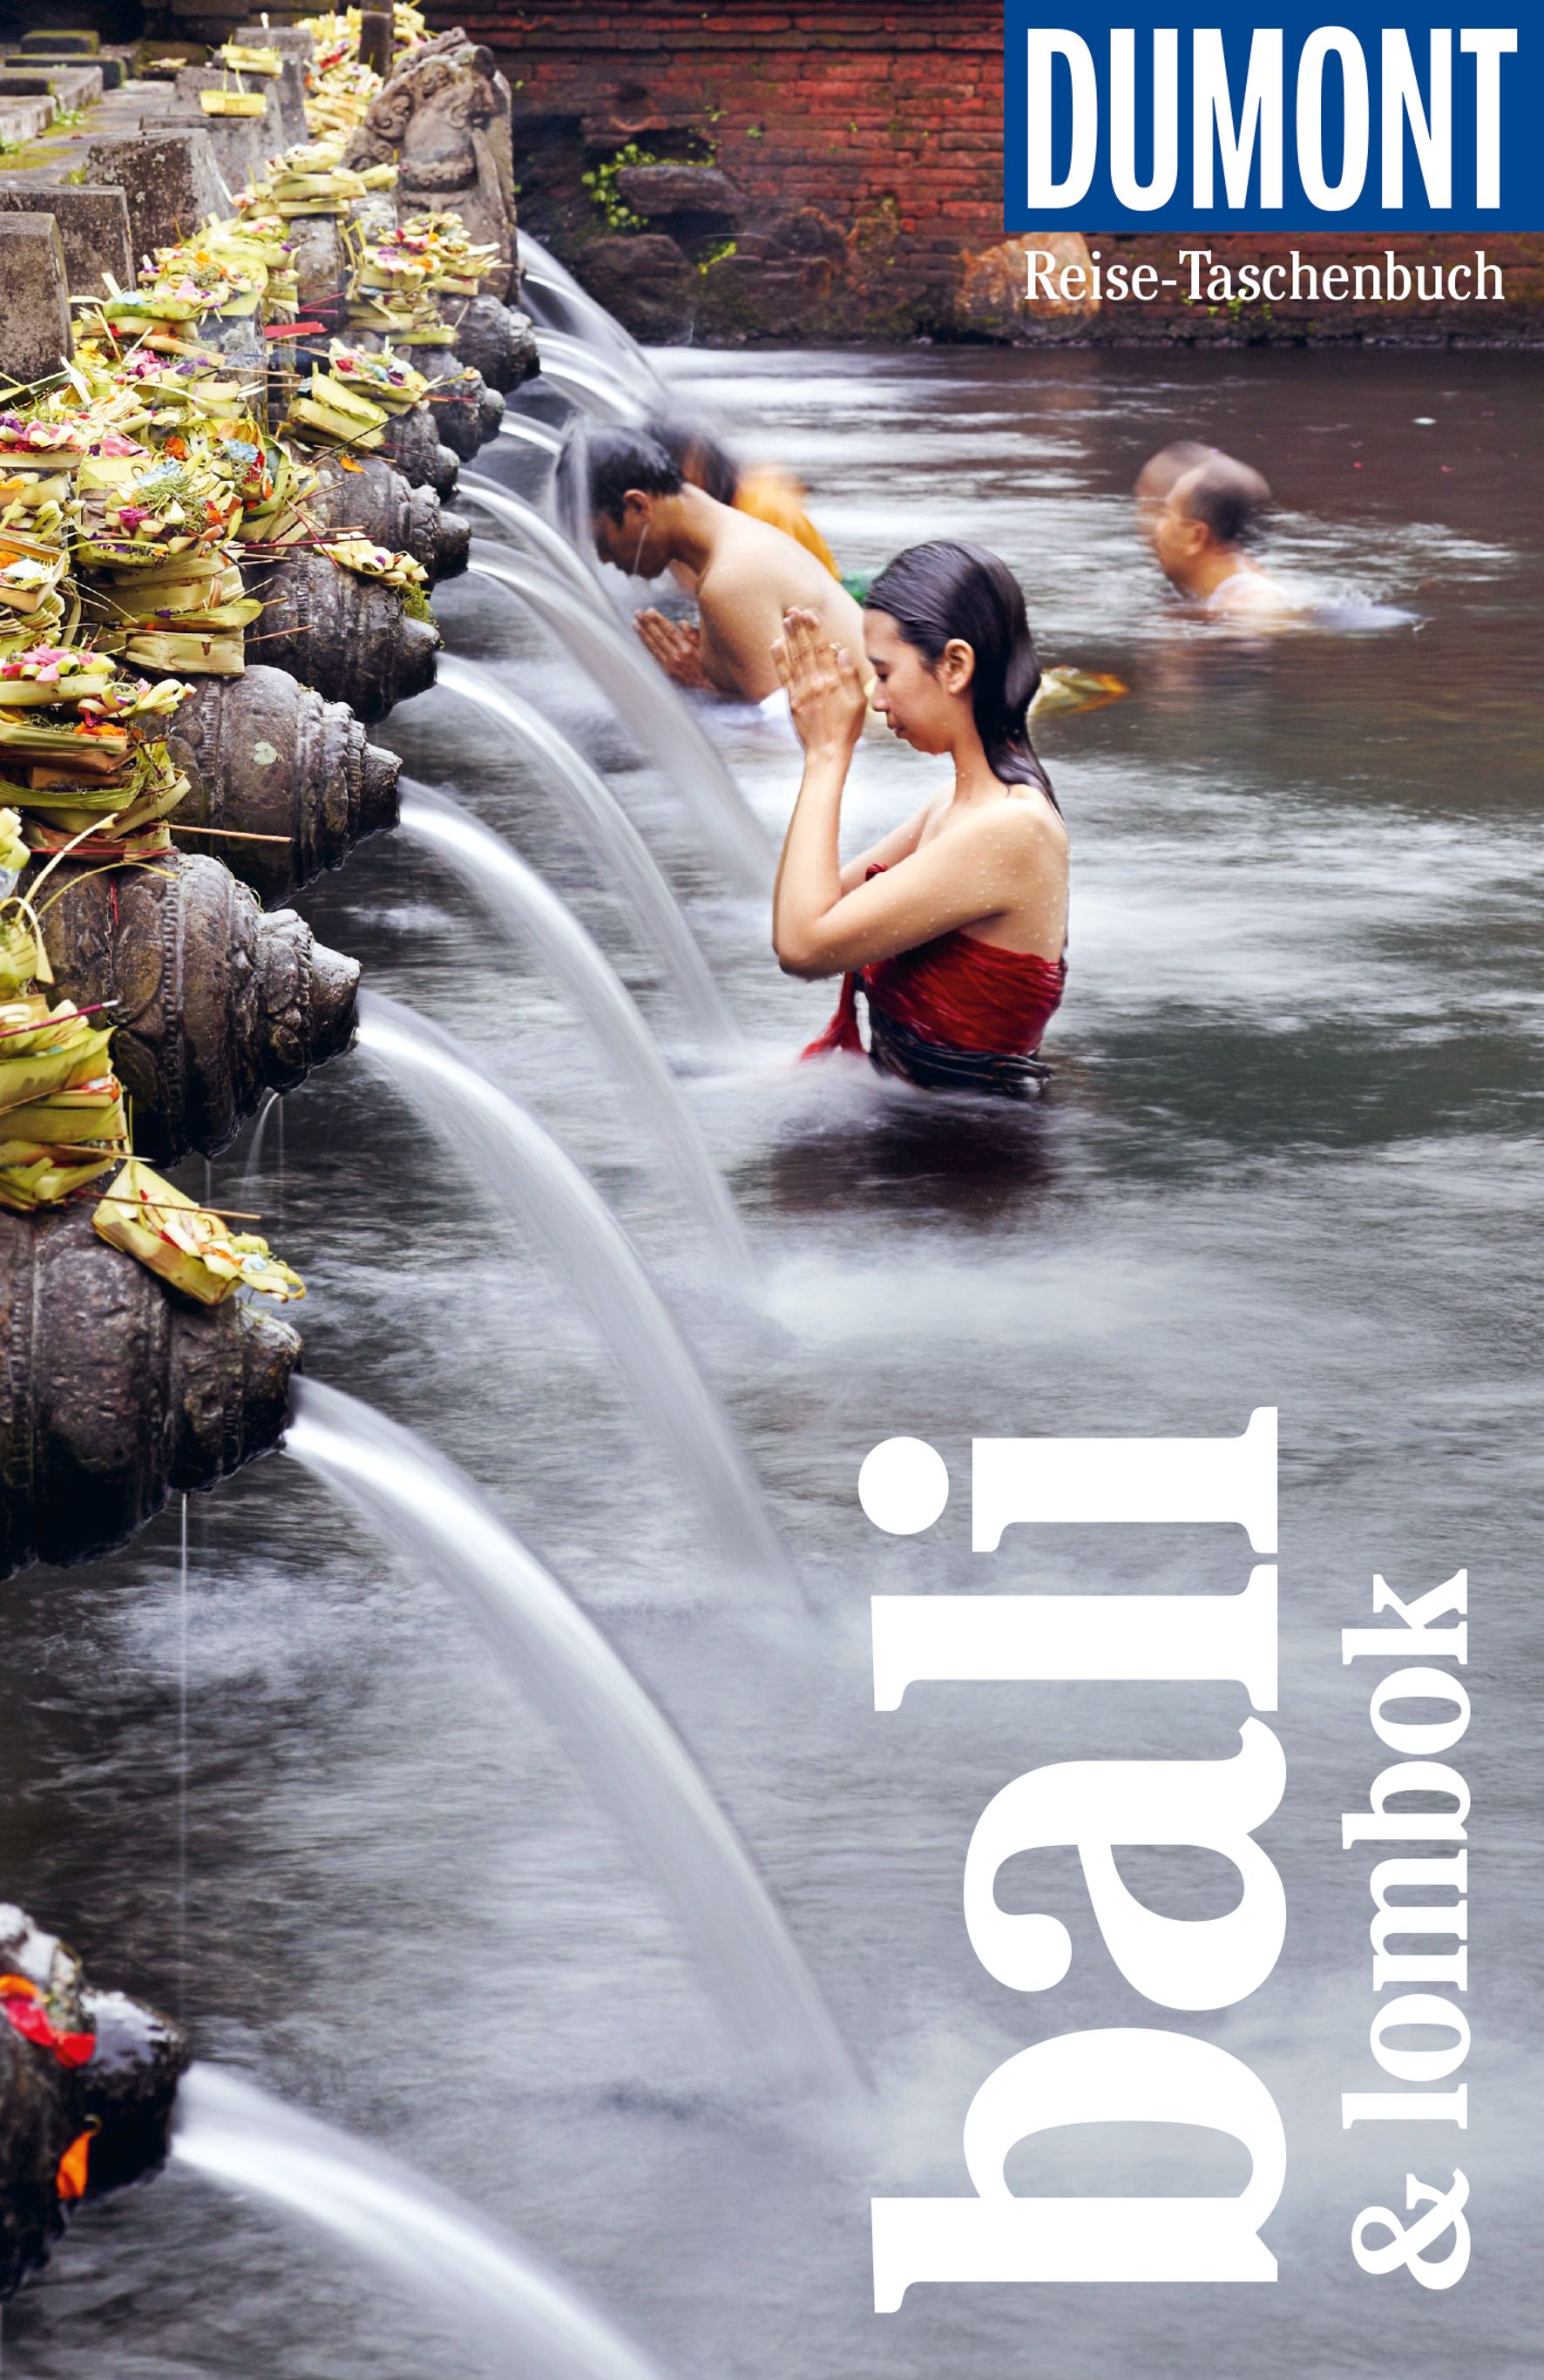 MAIRDUMONT Bali & Lombok (eBook)